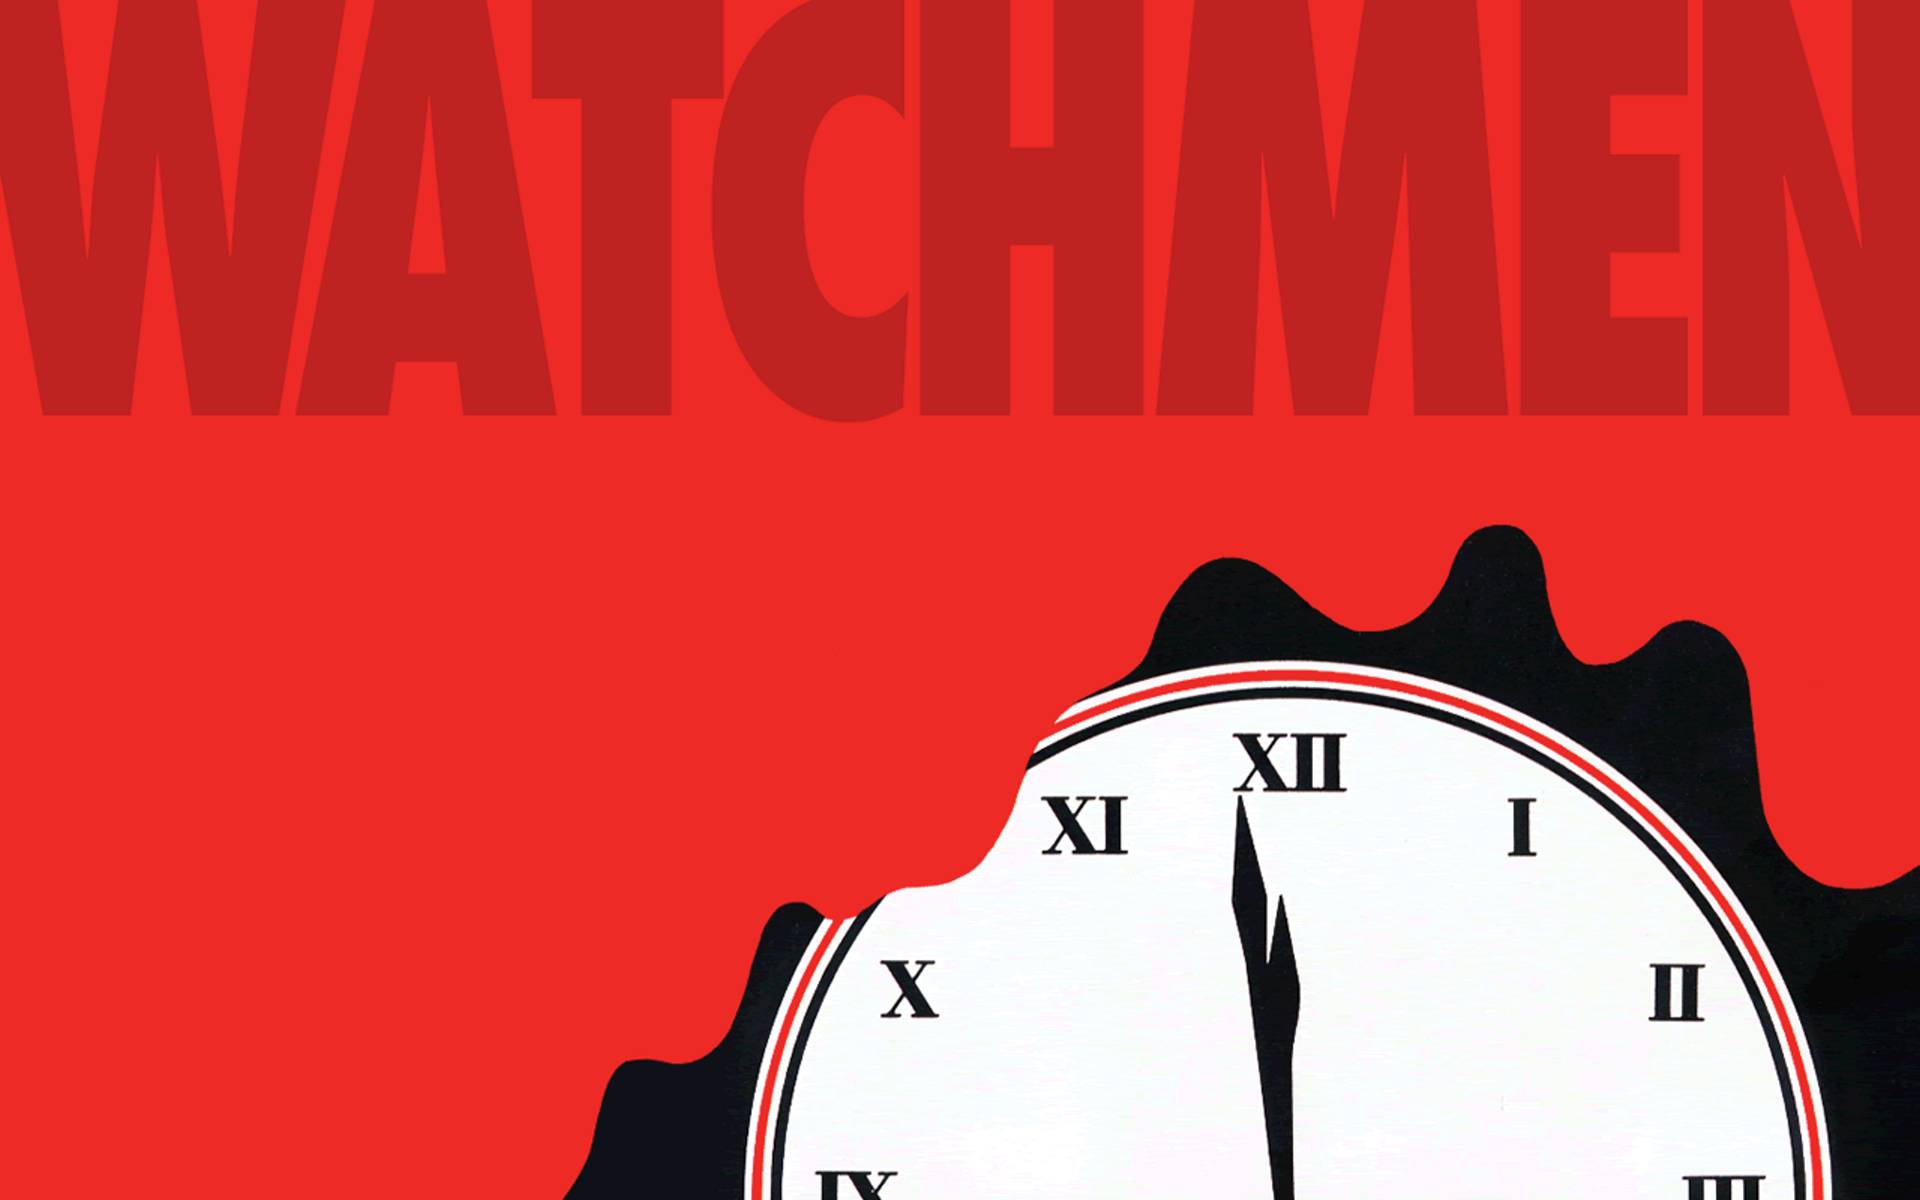 Comics Watchmen HD Wallpaper | Background Image